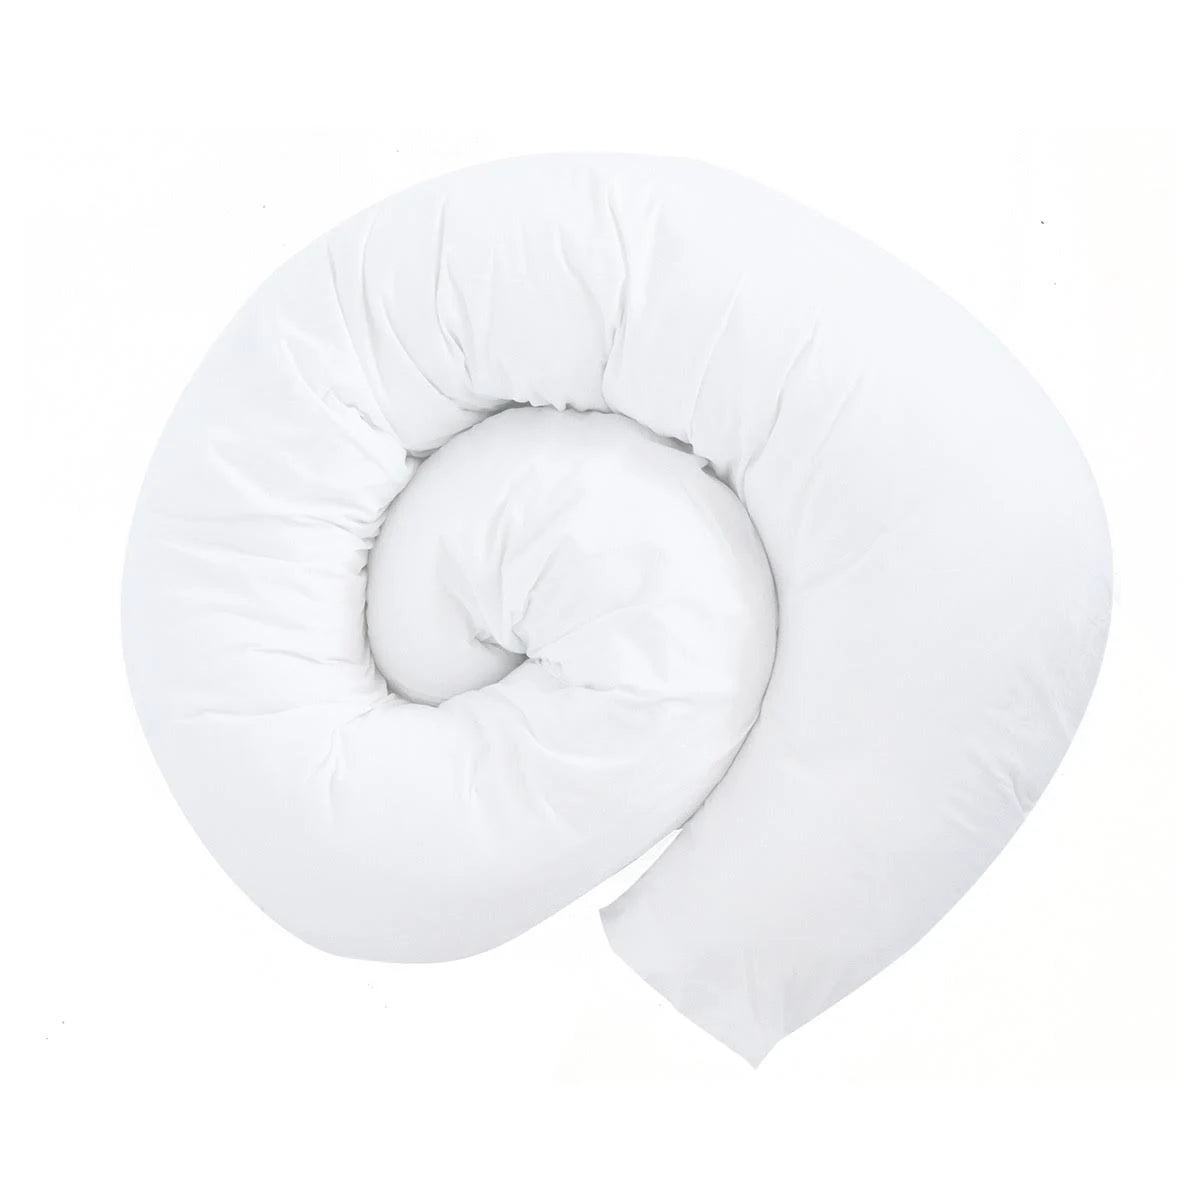 Snuggletime Body Comfort Pillow White